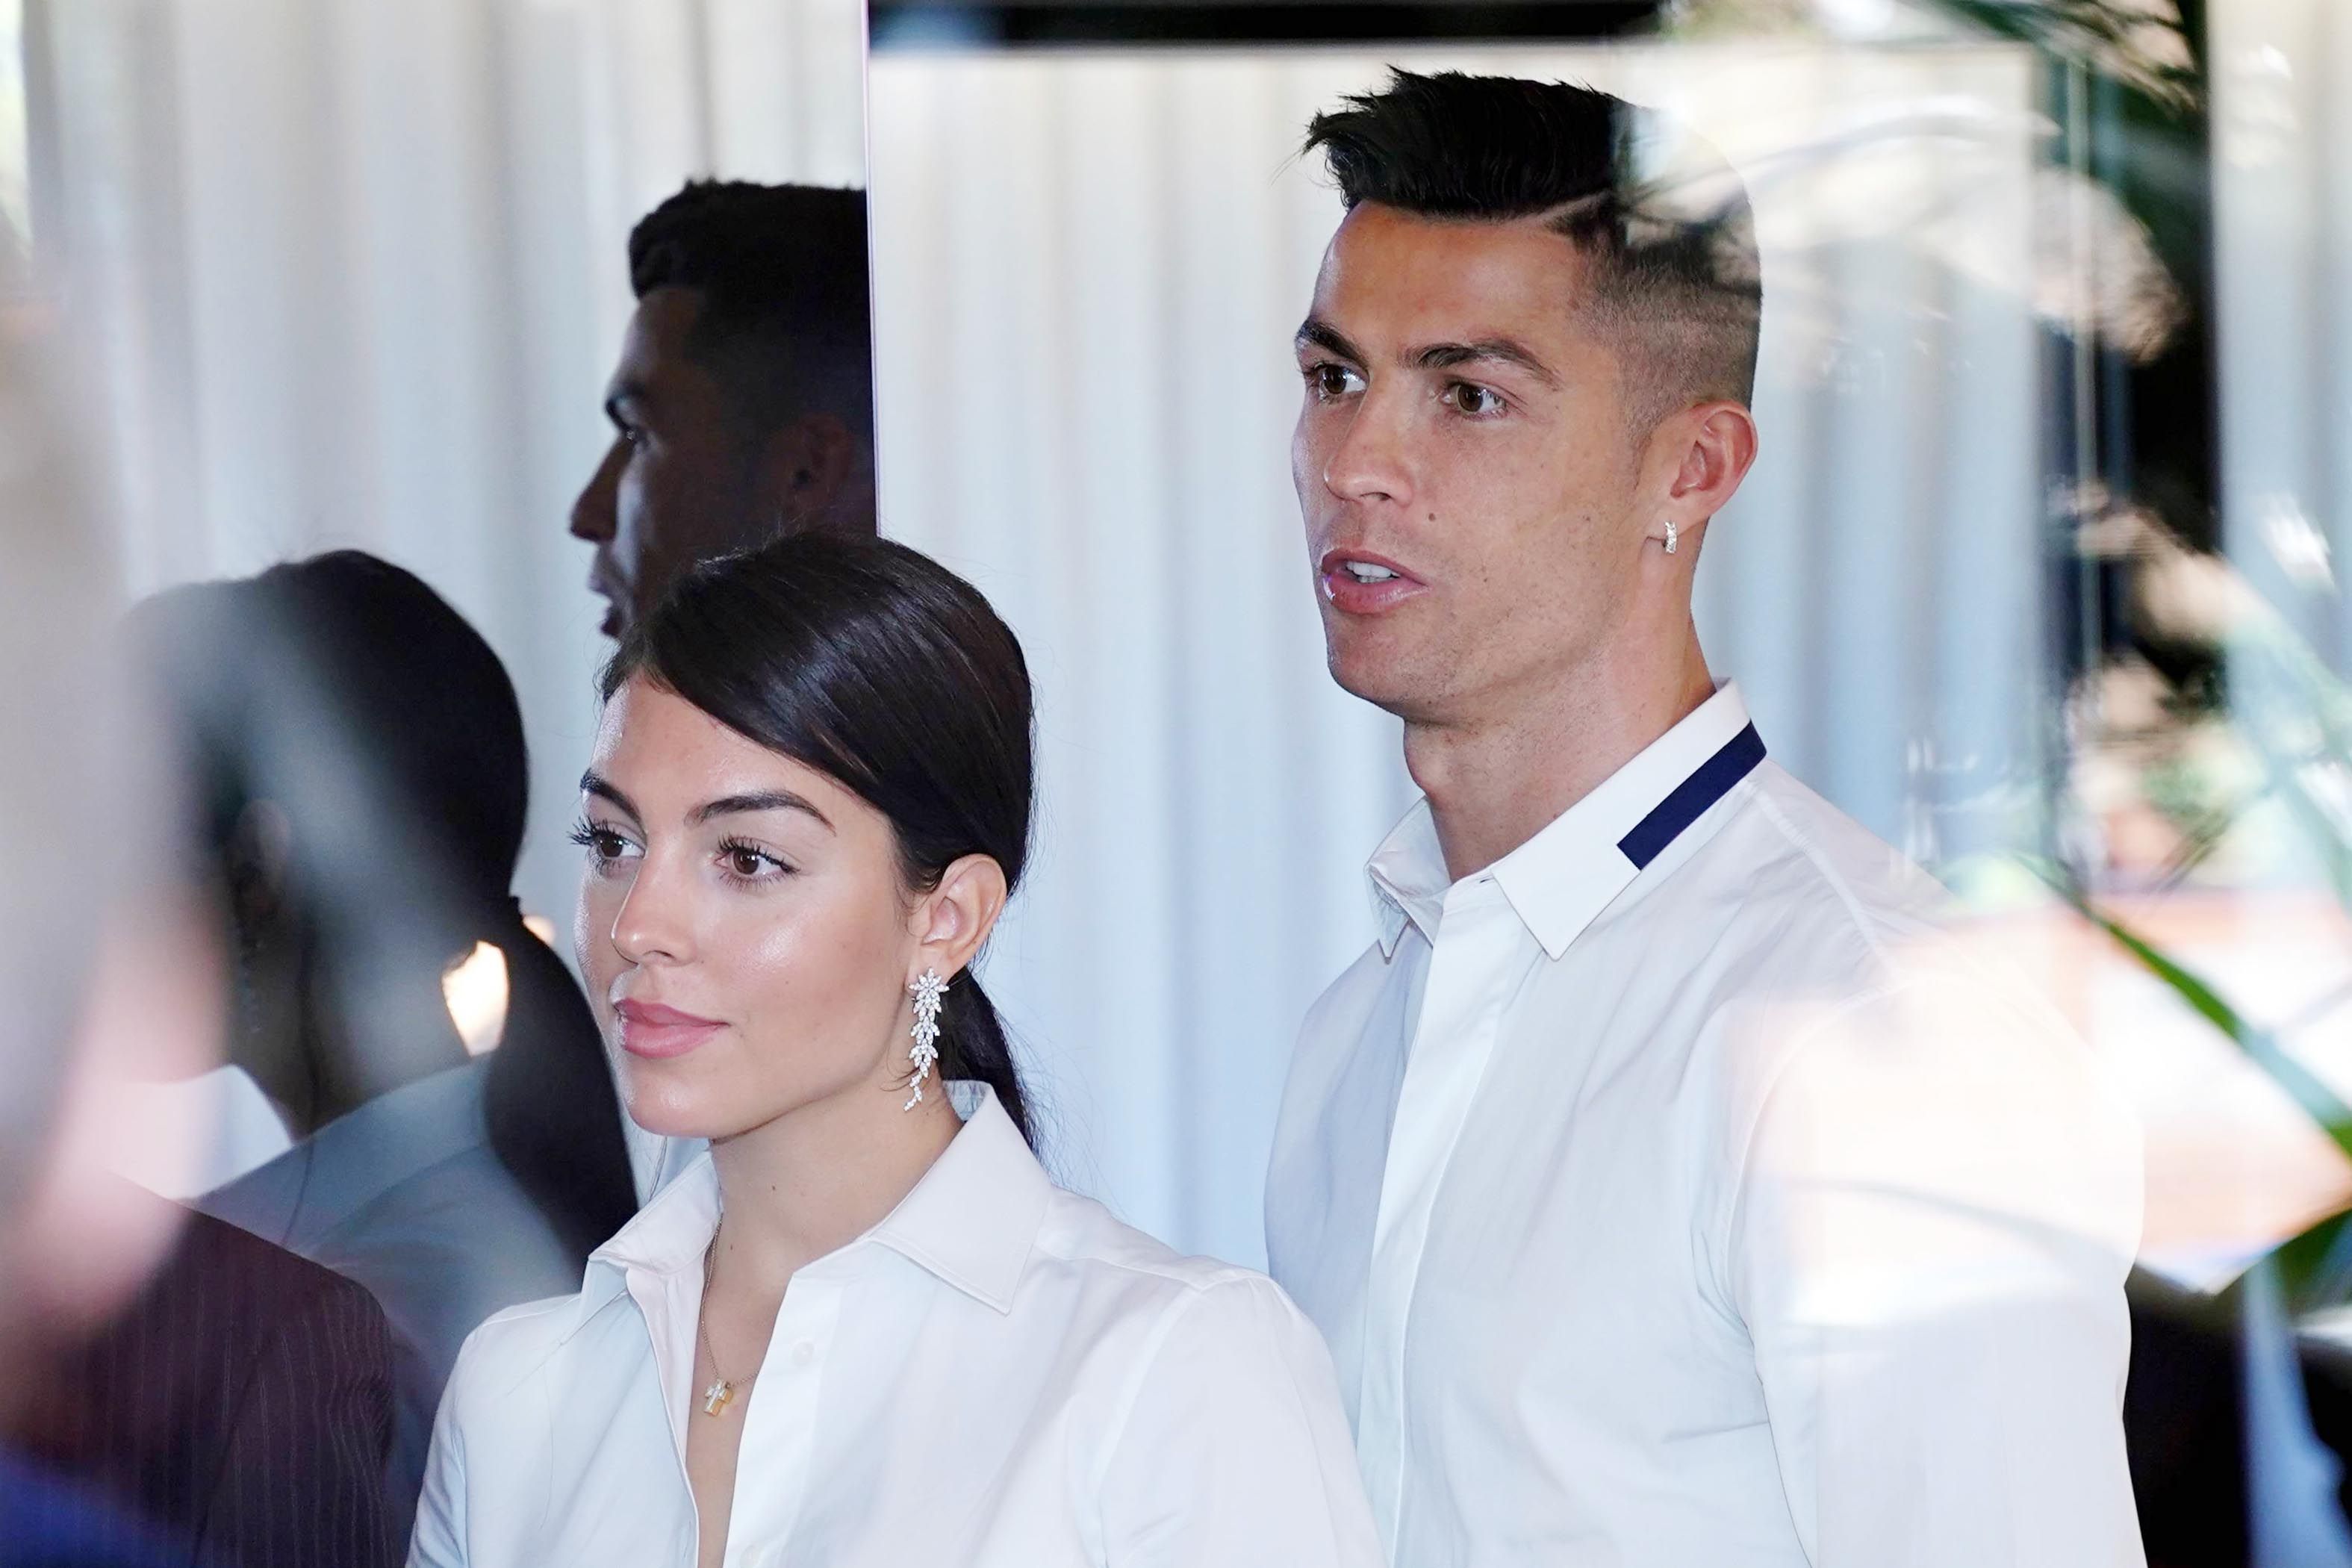 Why hasn't Cristiano Ronaldo married Georgina Rodriguez yet?